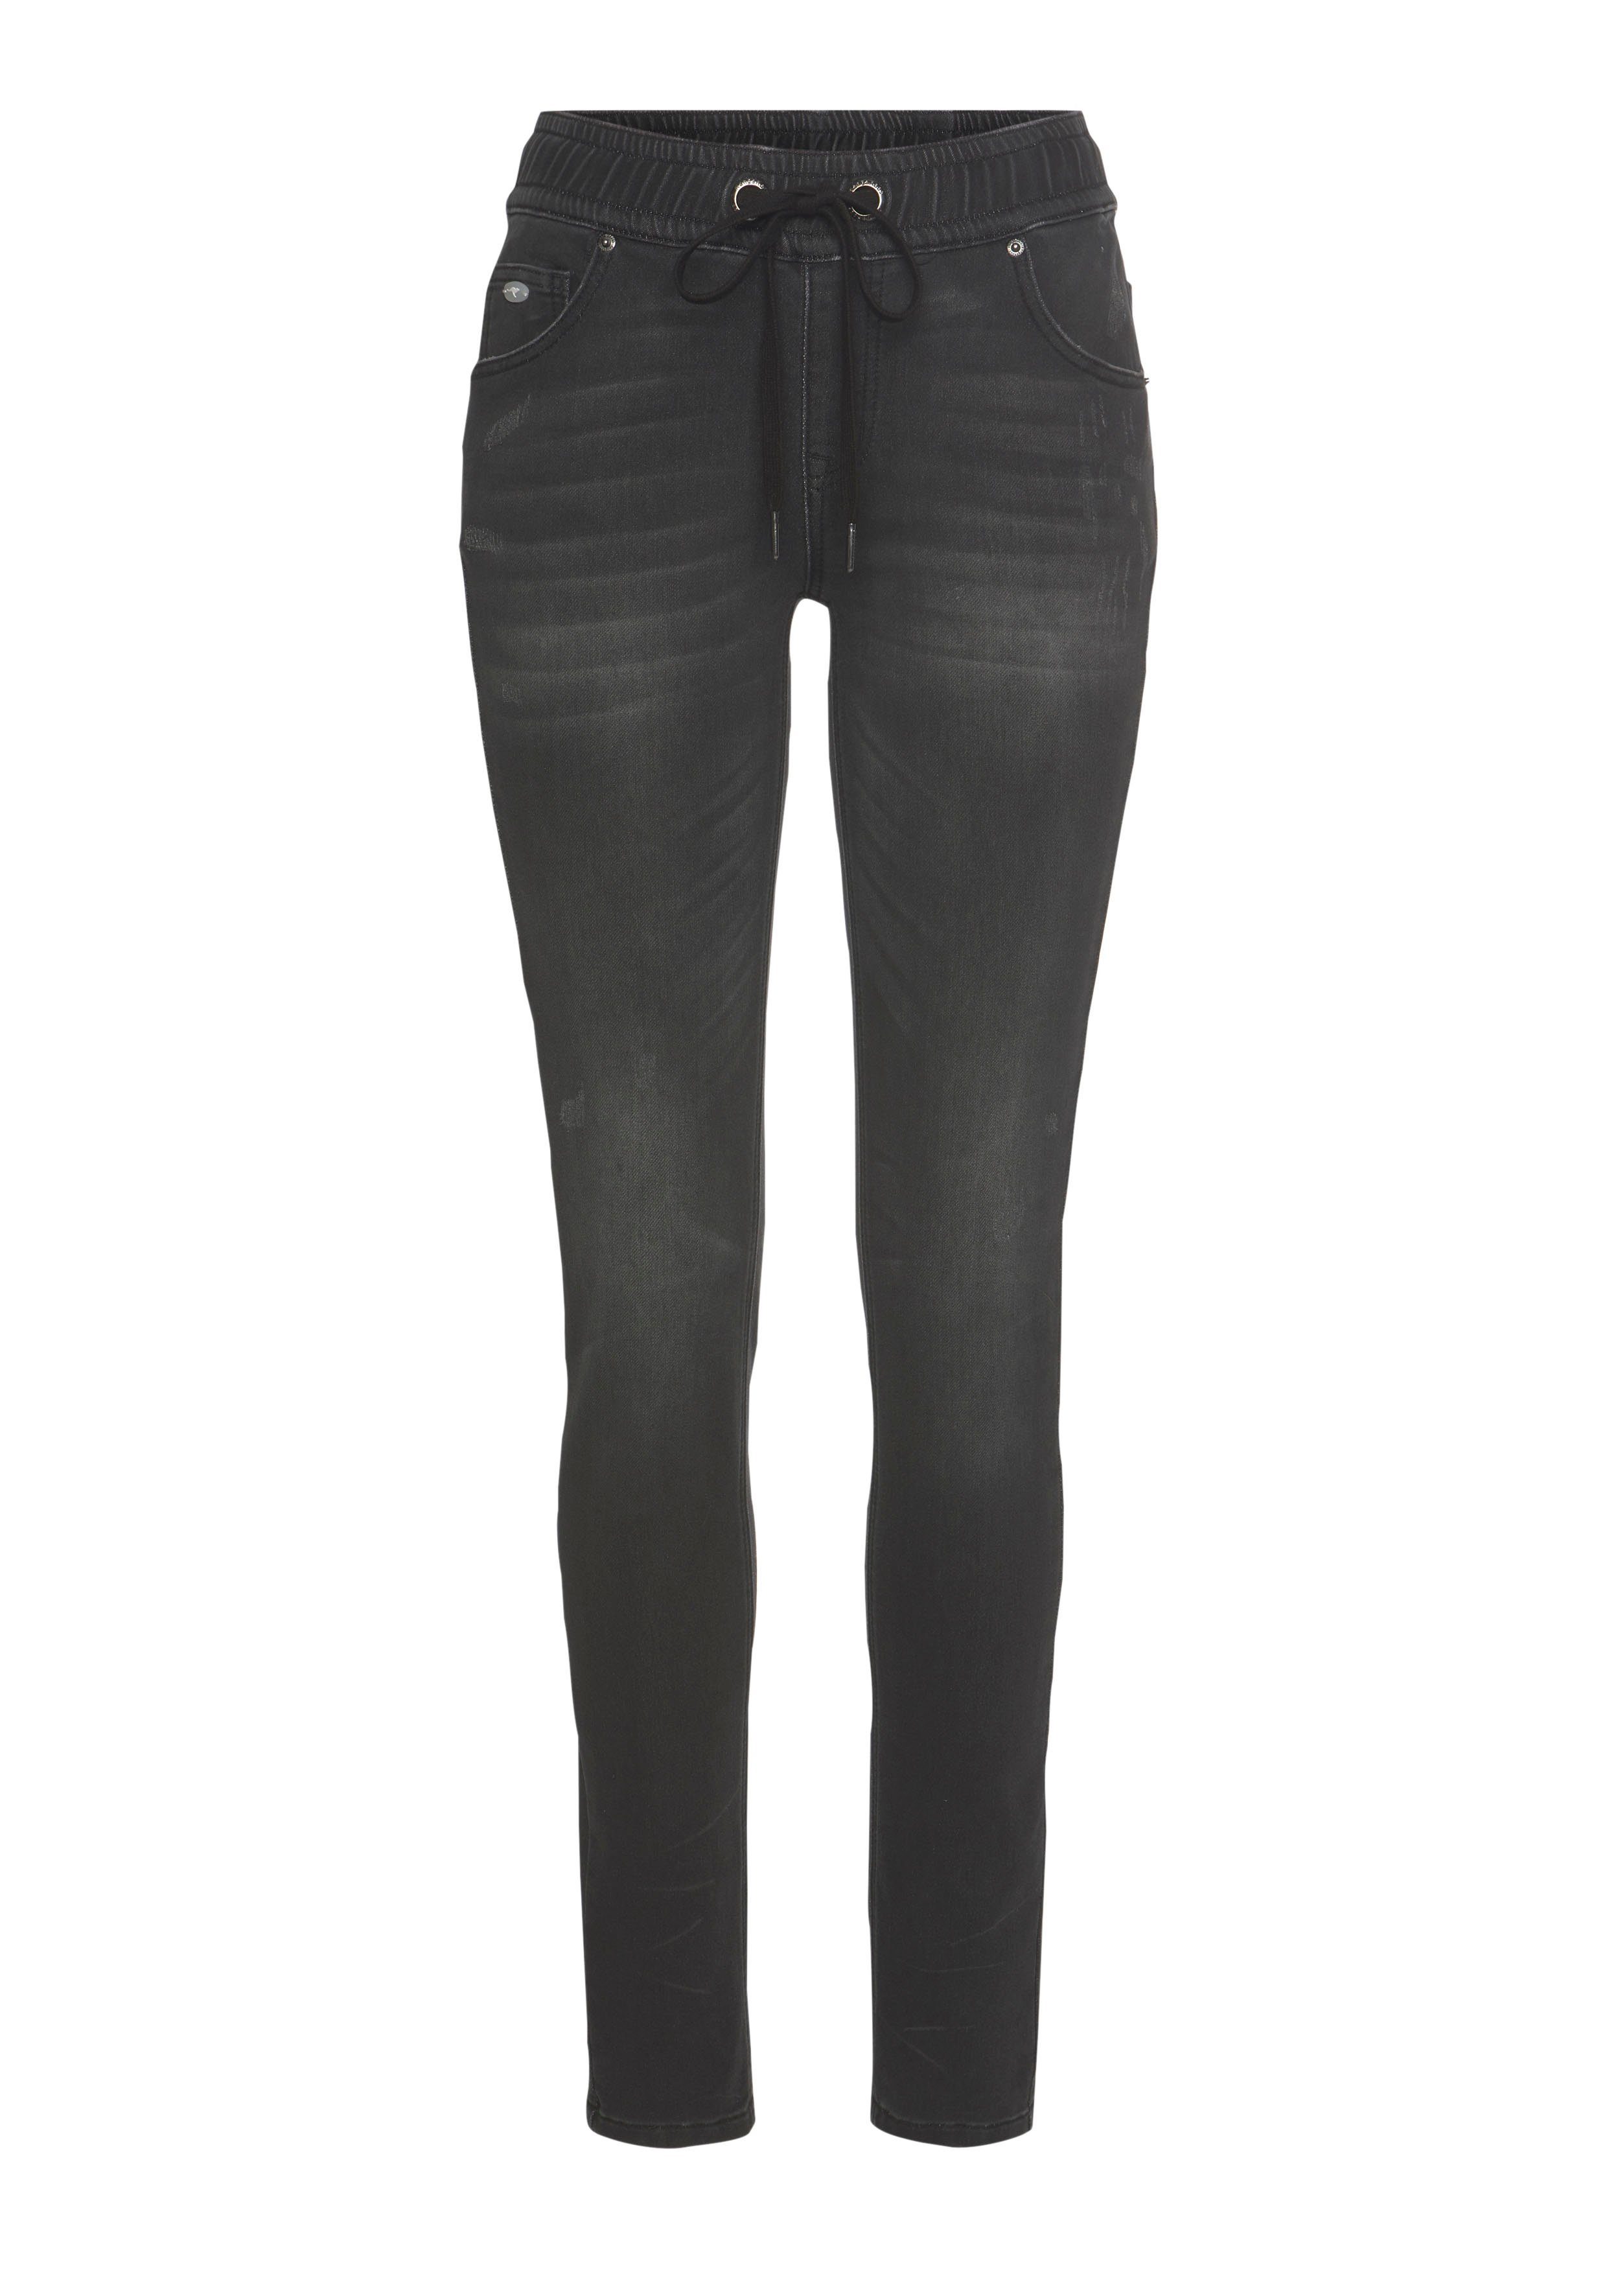 Pants in Jogg elastischem black-used Bündchen Denim-Optik mit KangaROOS